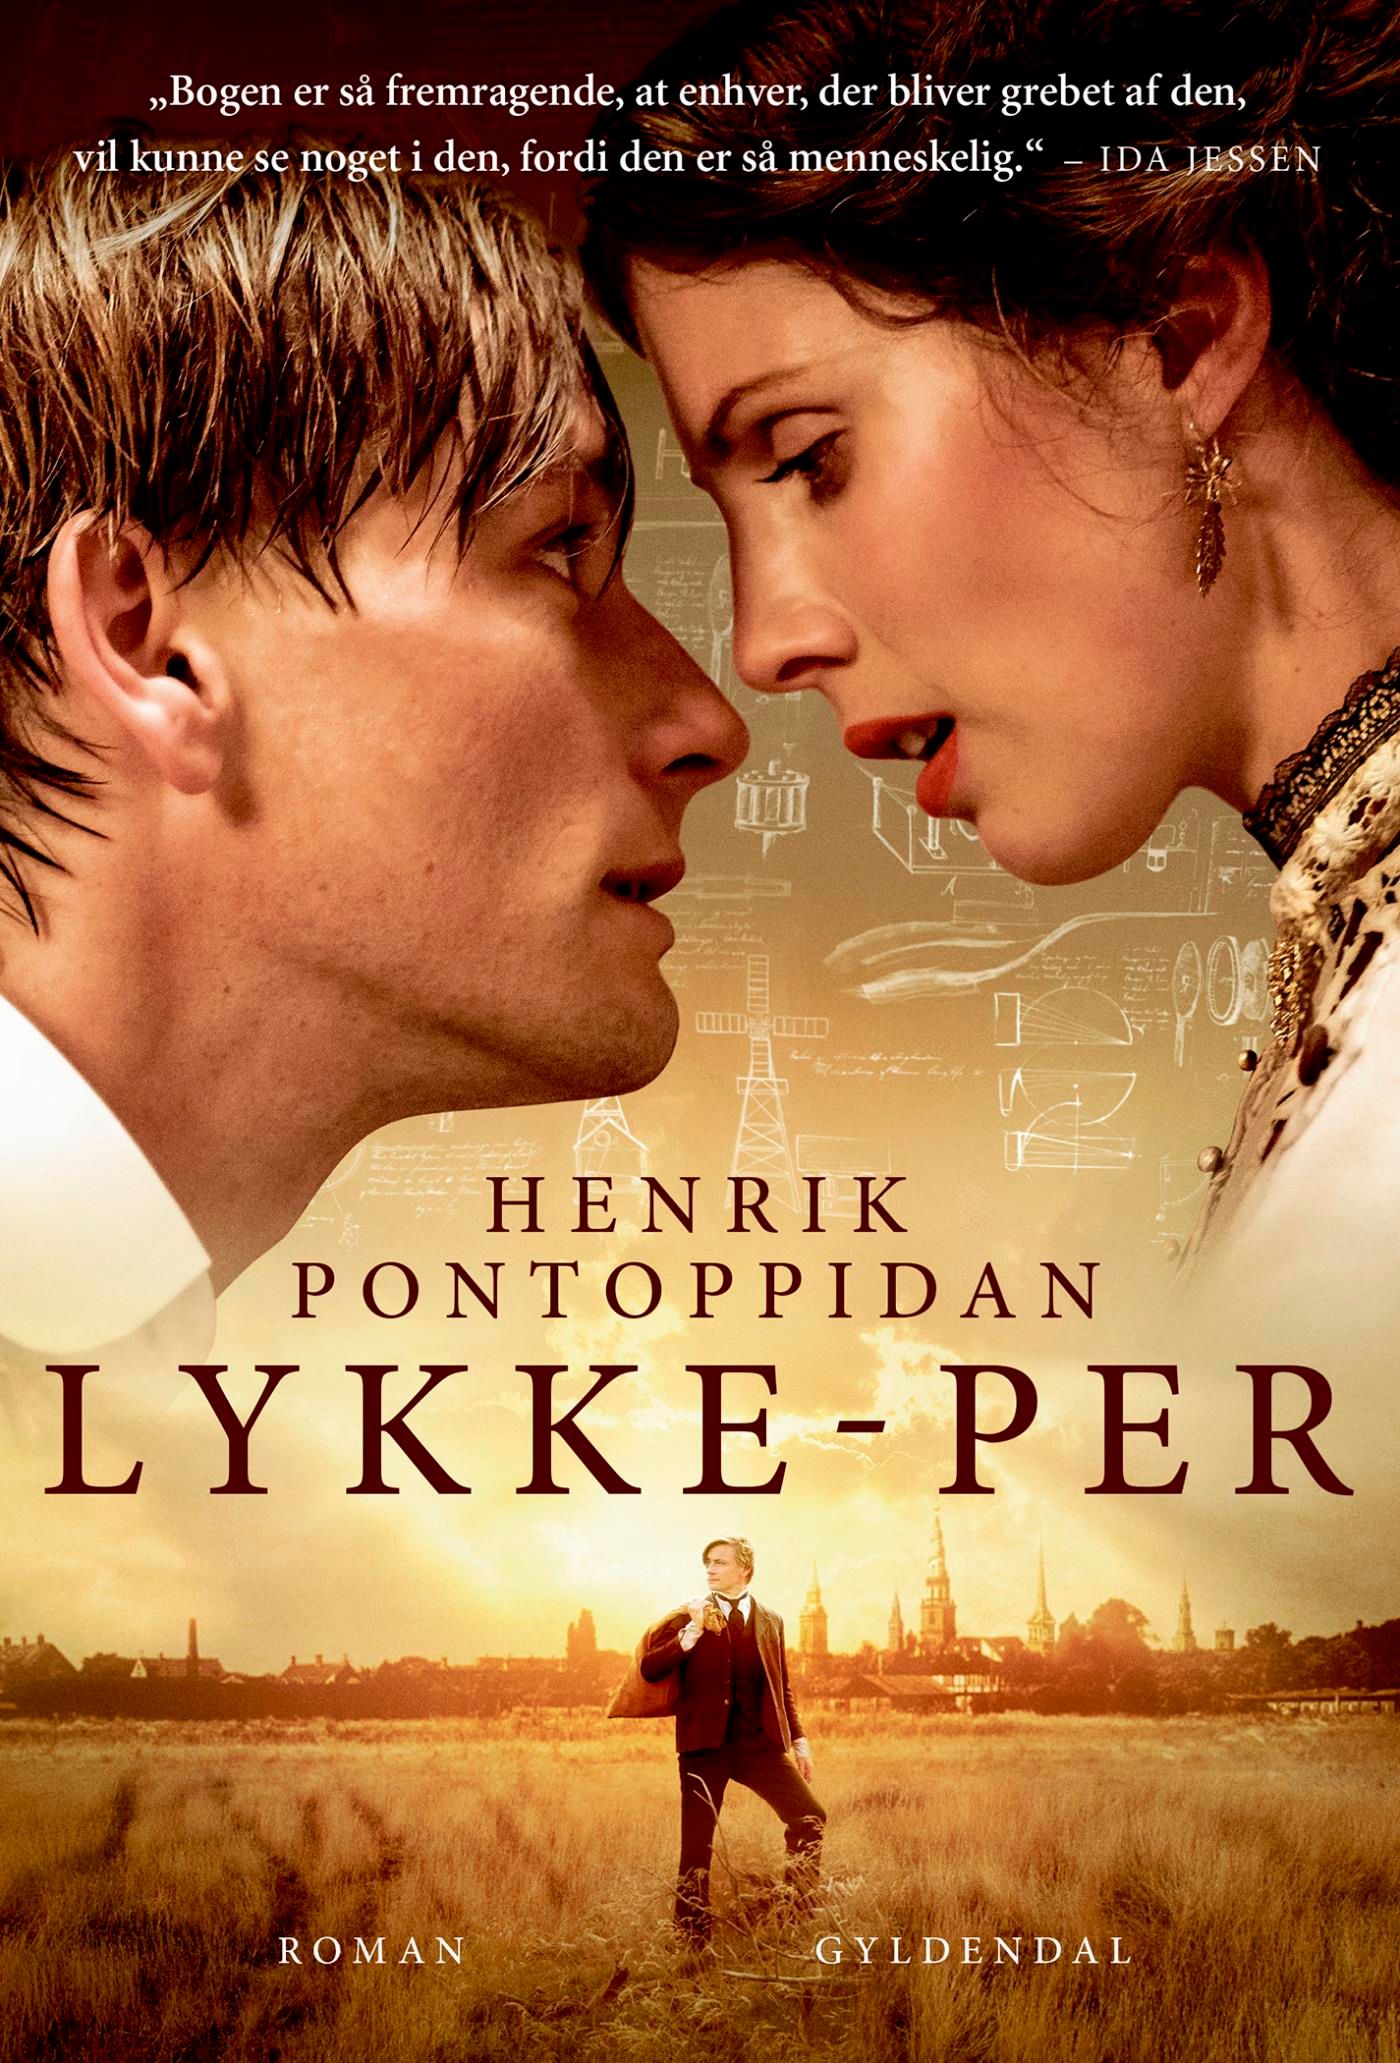 Lykke-Per, eBook by Henrik Pontoppidan